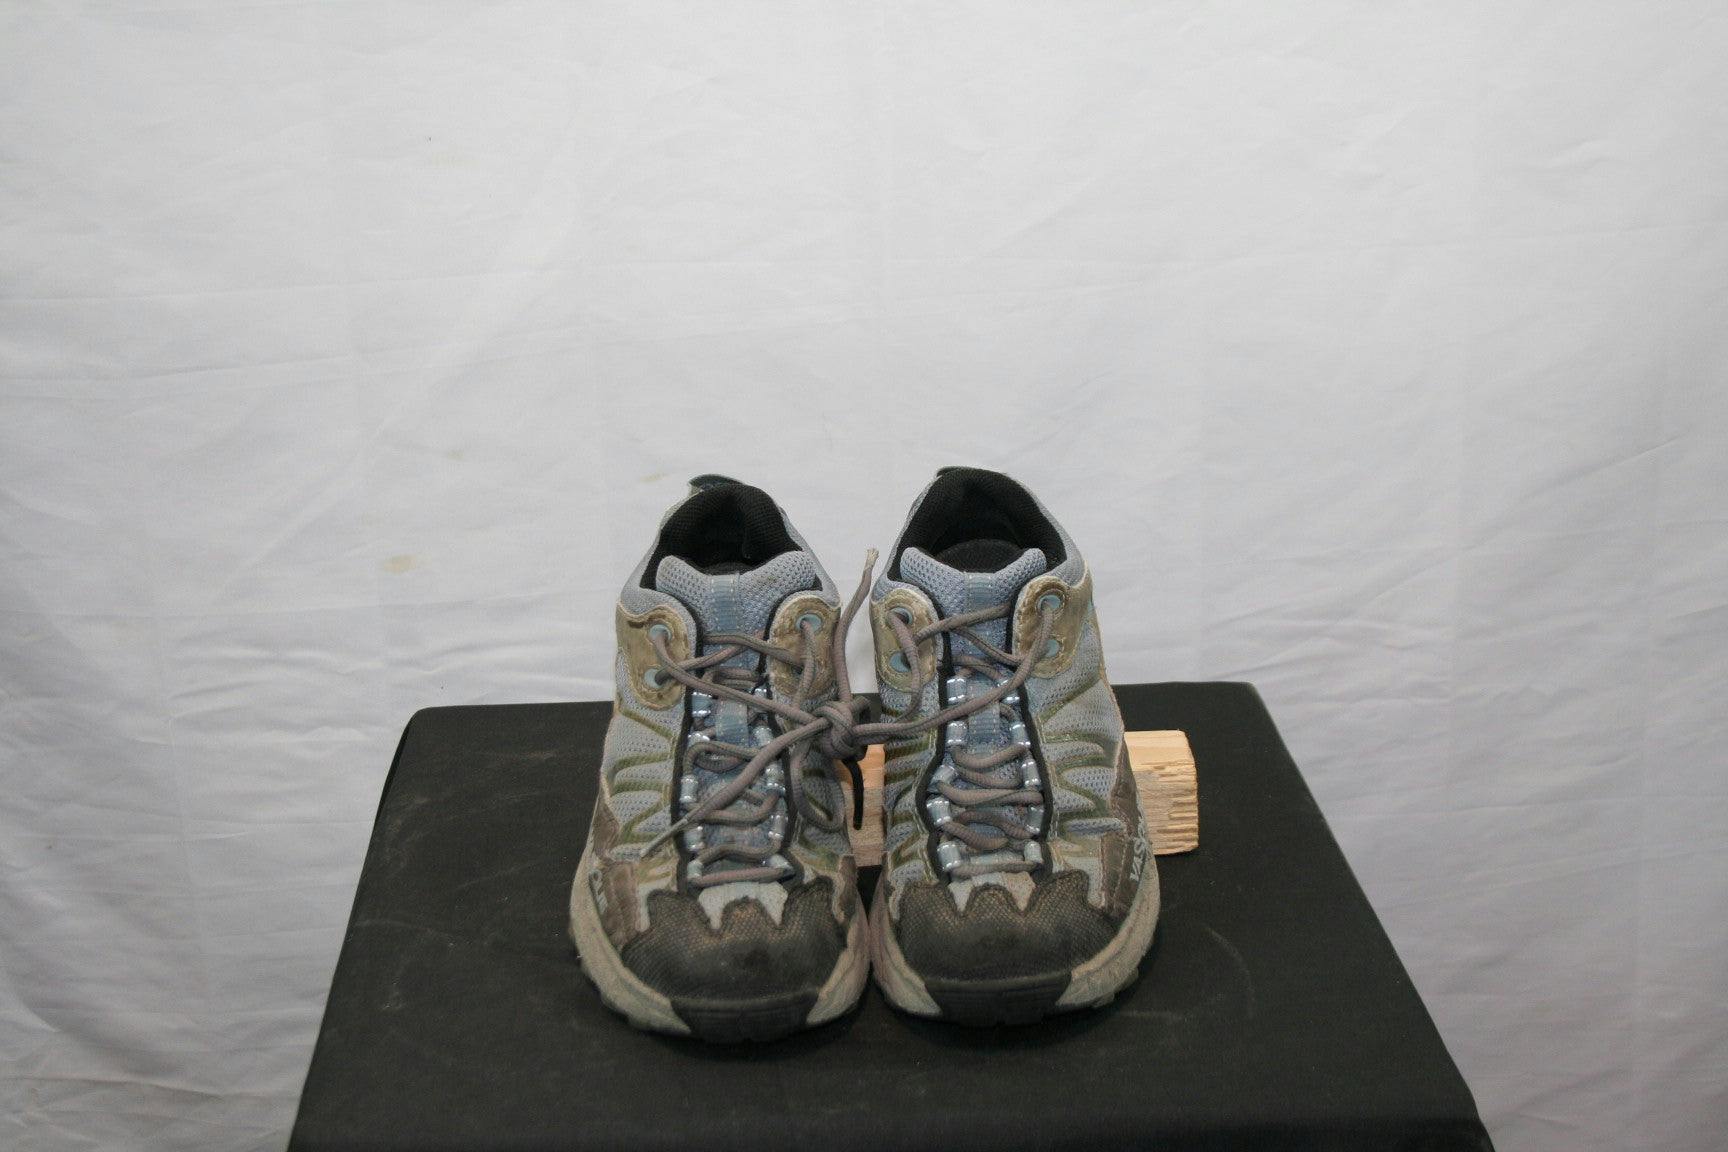 Vasque Trail Running Shoes - Men's US 6.5